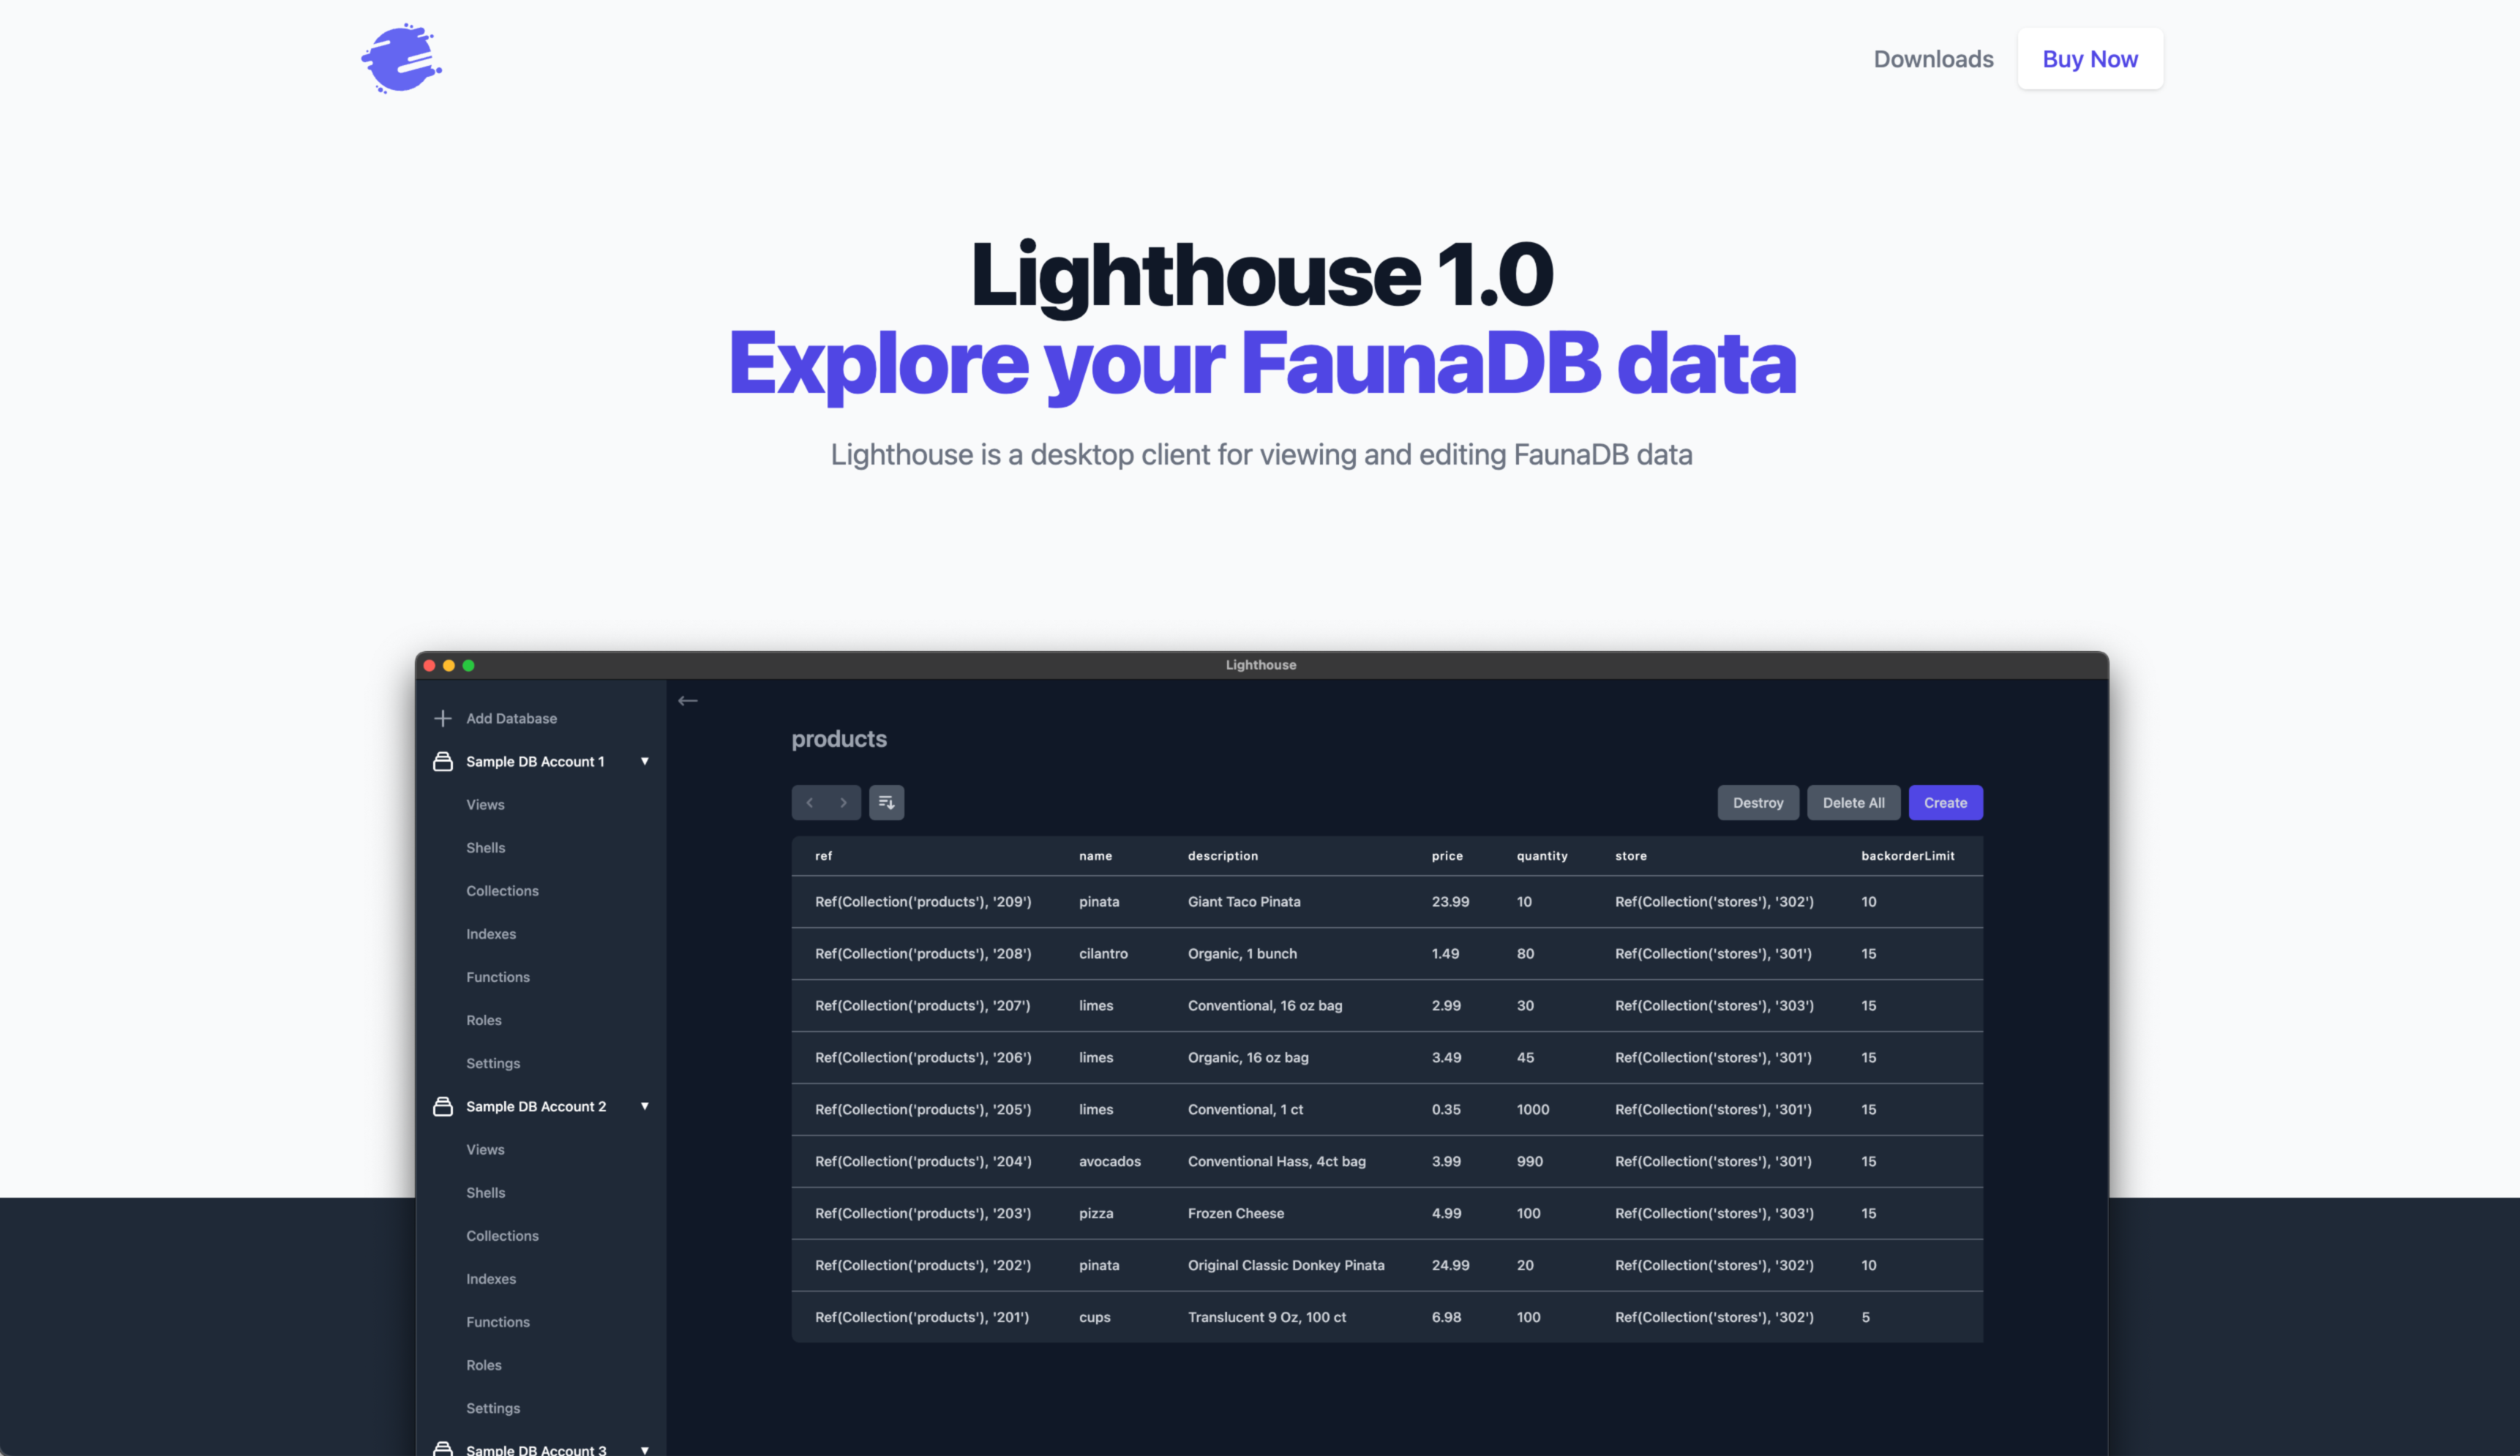 Lighthouse for FaunaDB